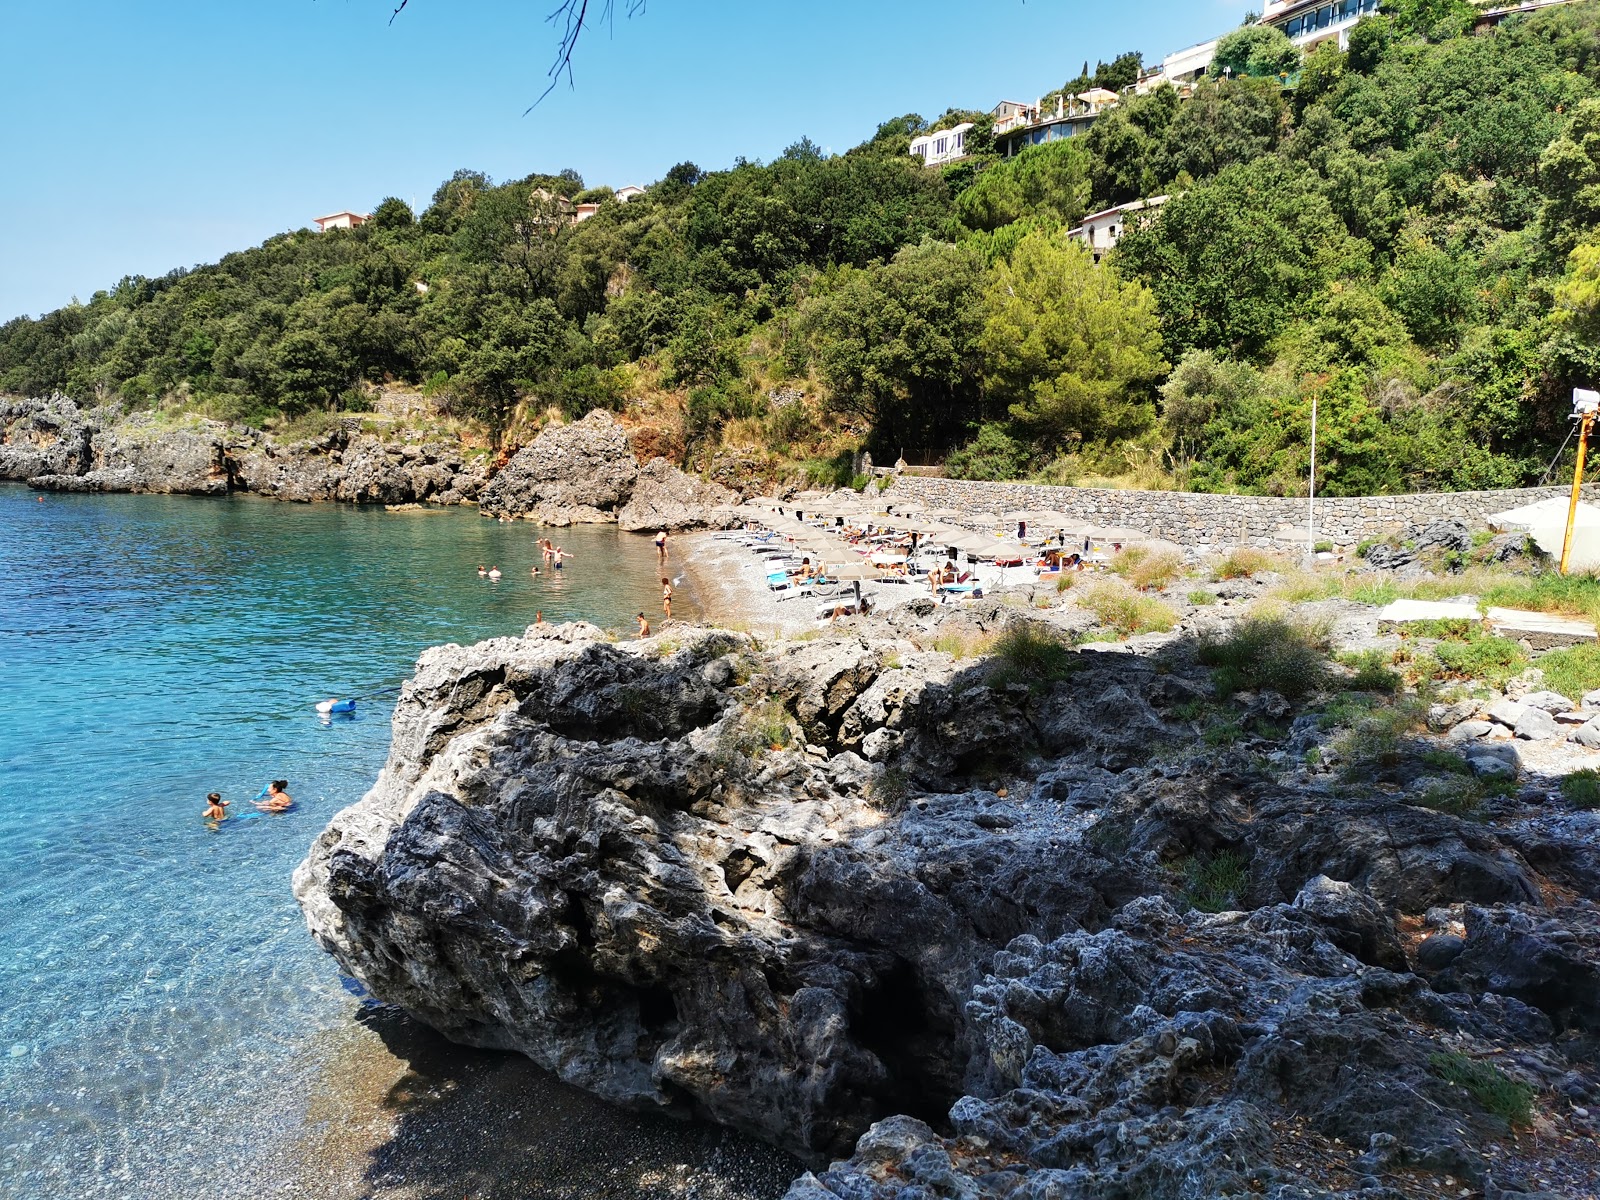 Photo of Spiaggia Portacquafridda beach resort area